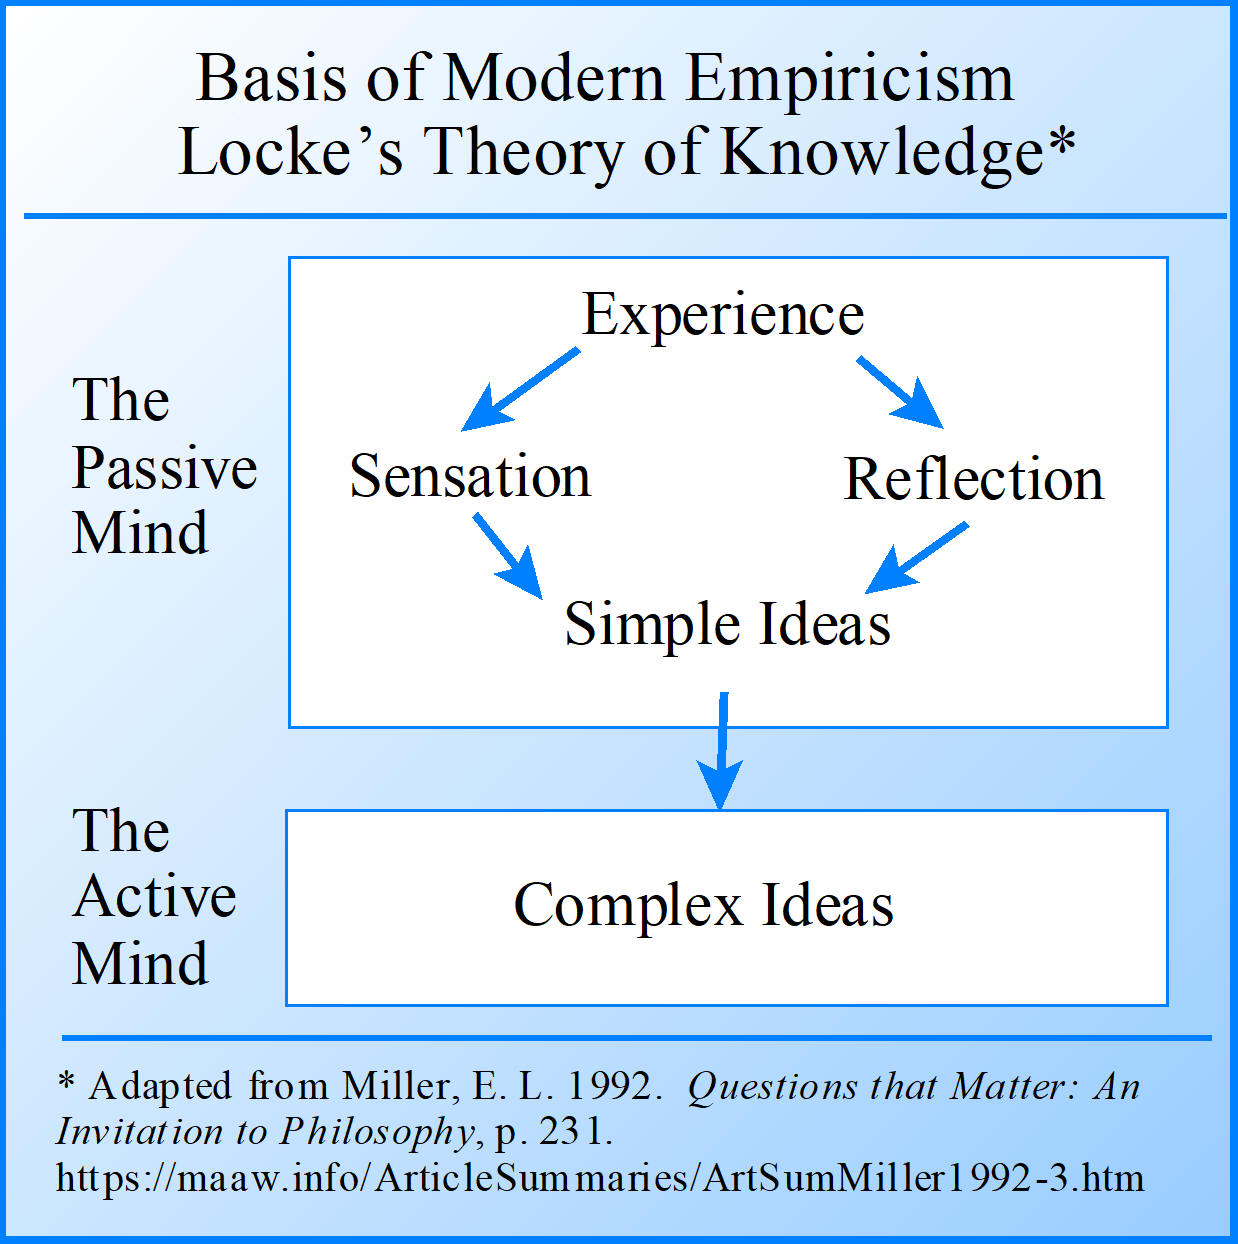 Basis of Modern Empiricism: Locke's Theory of Knowledge